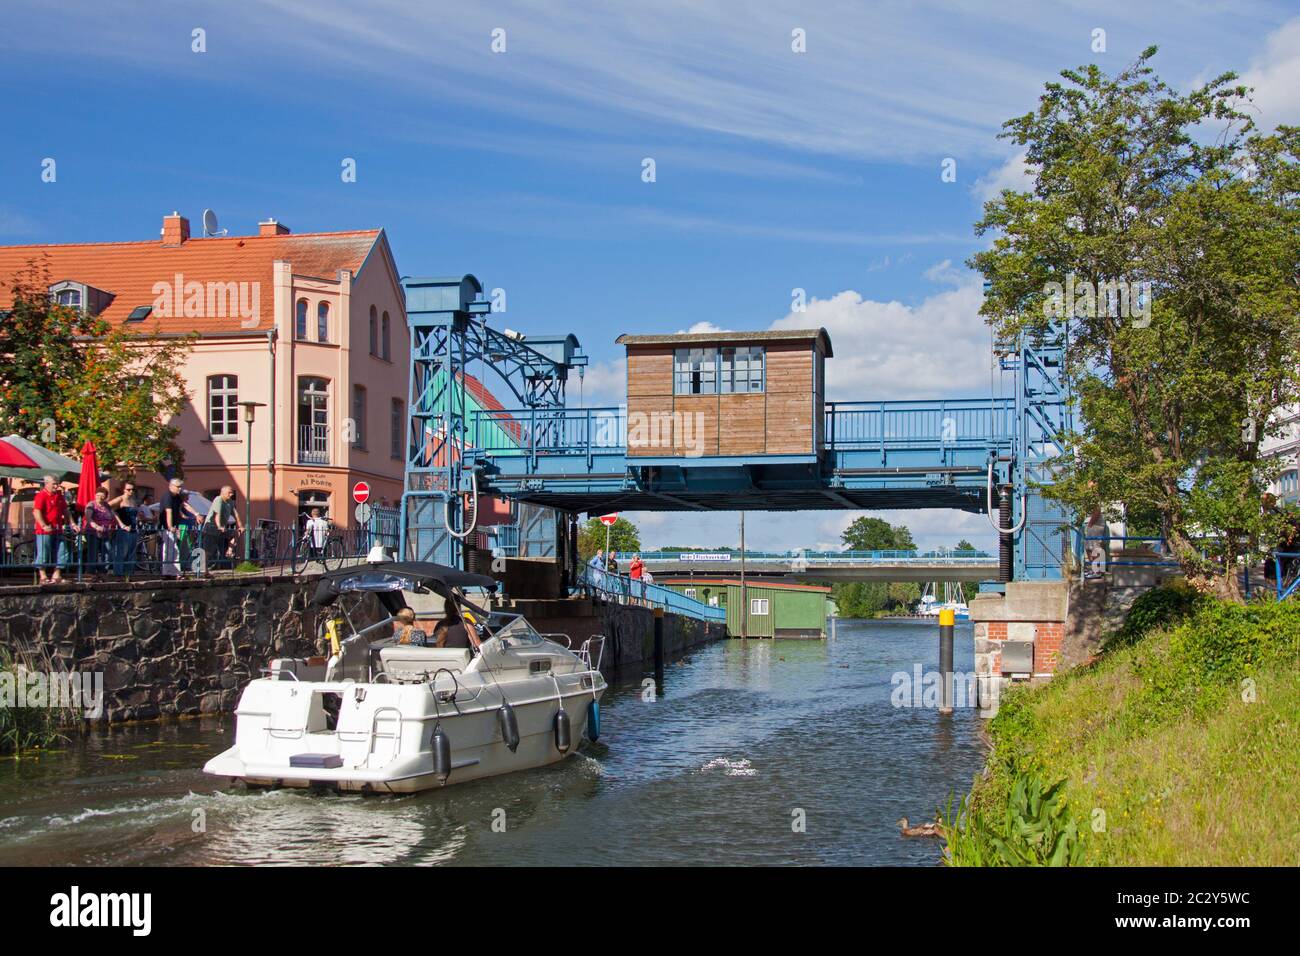 Tradizionale ponte elevatore sul fiume Elde a Plau am See, città nel quartiere Ludwigslust-Parchim, Meclemburgo-Pomerania occidentale, Germania Foto Stock